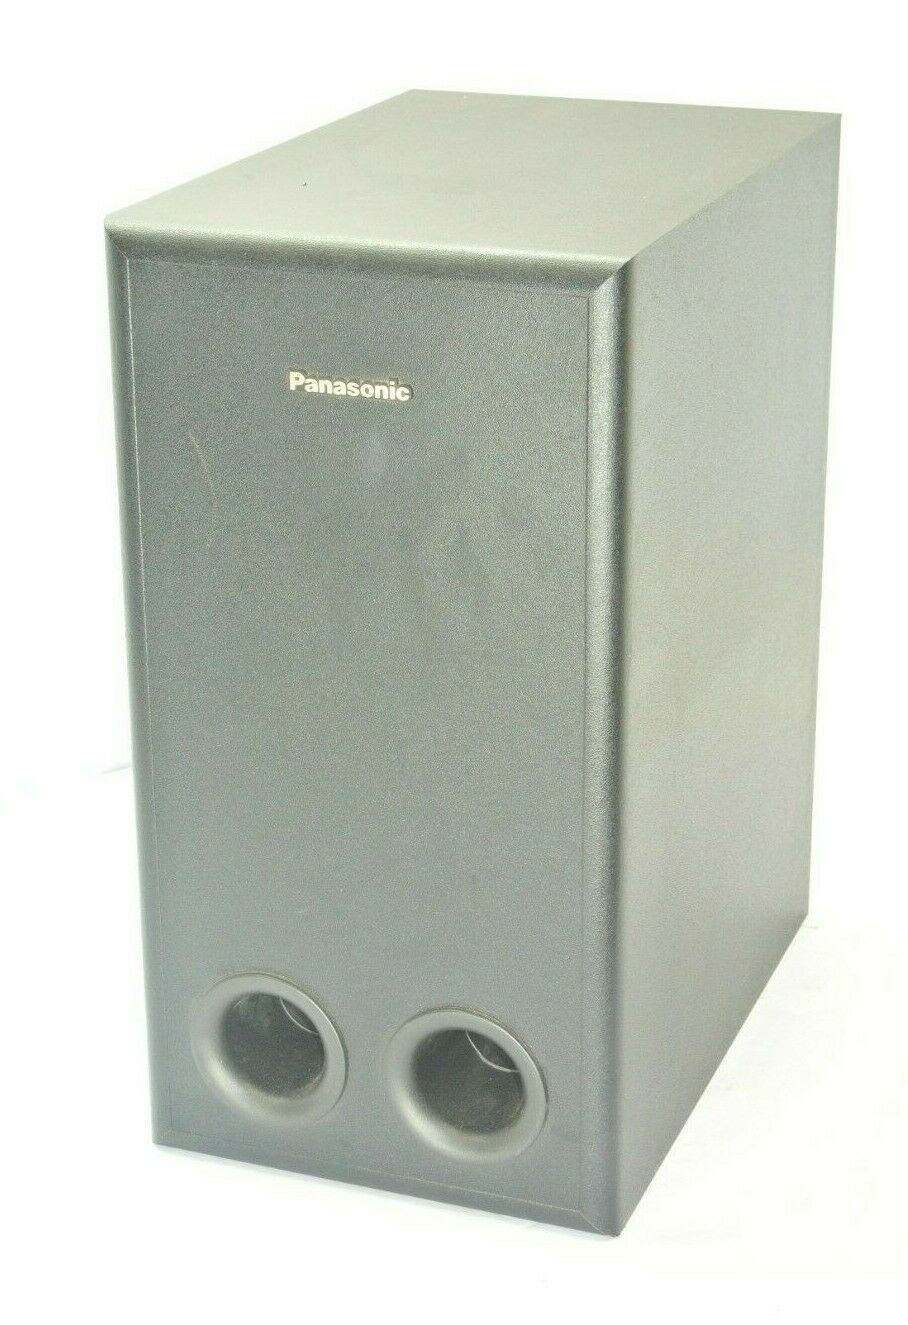 Used Panasonic SB-AK210 Subwoofers for Sale | HifiShark.com